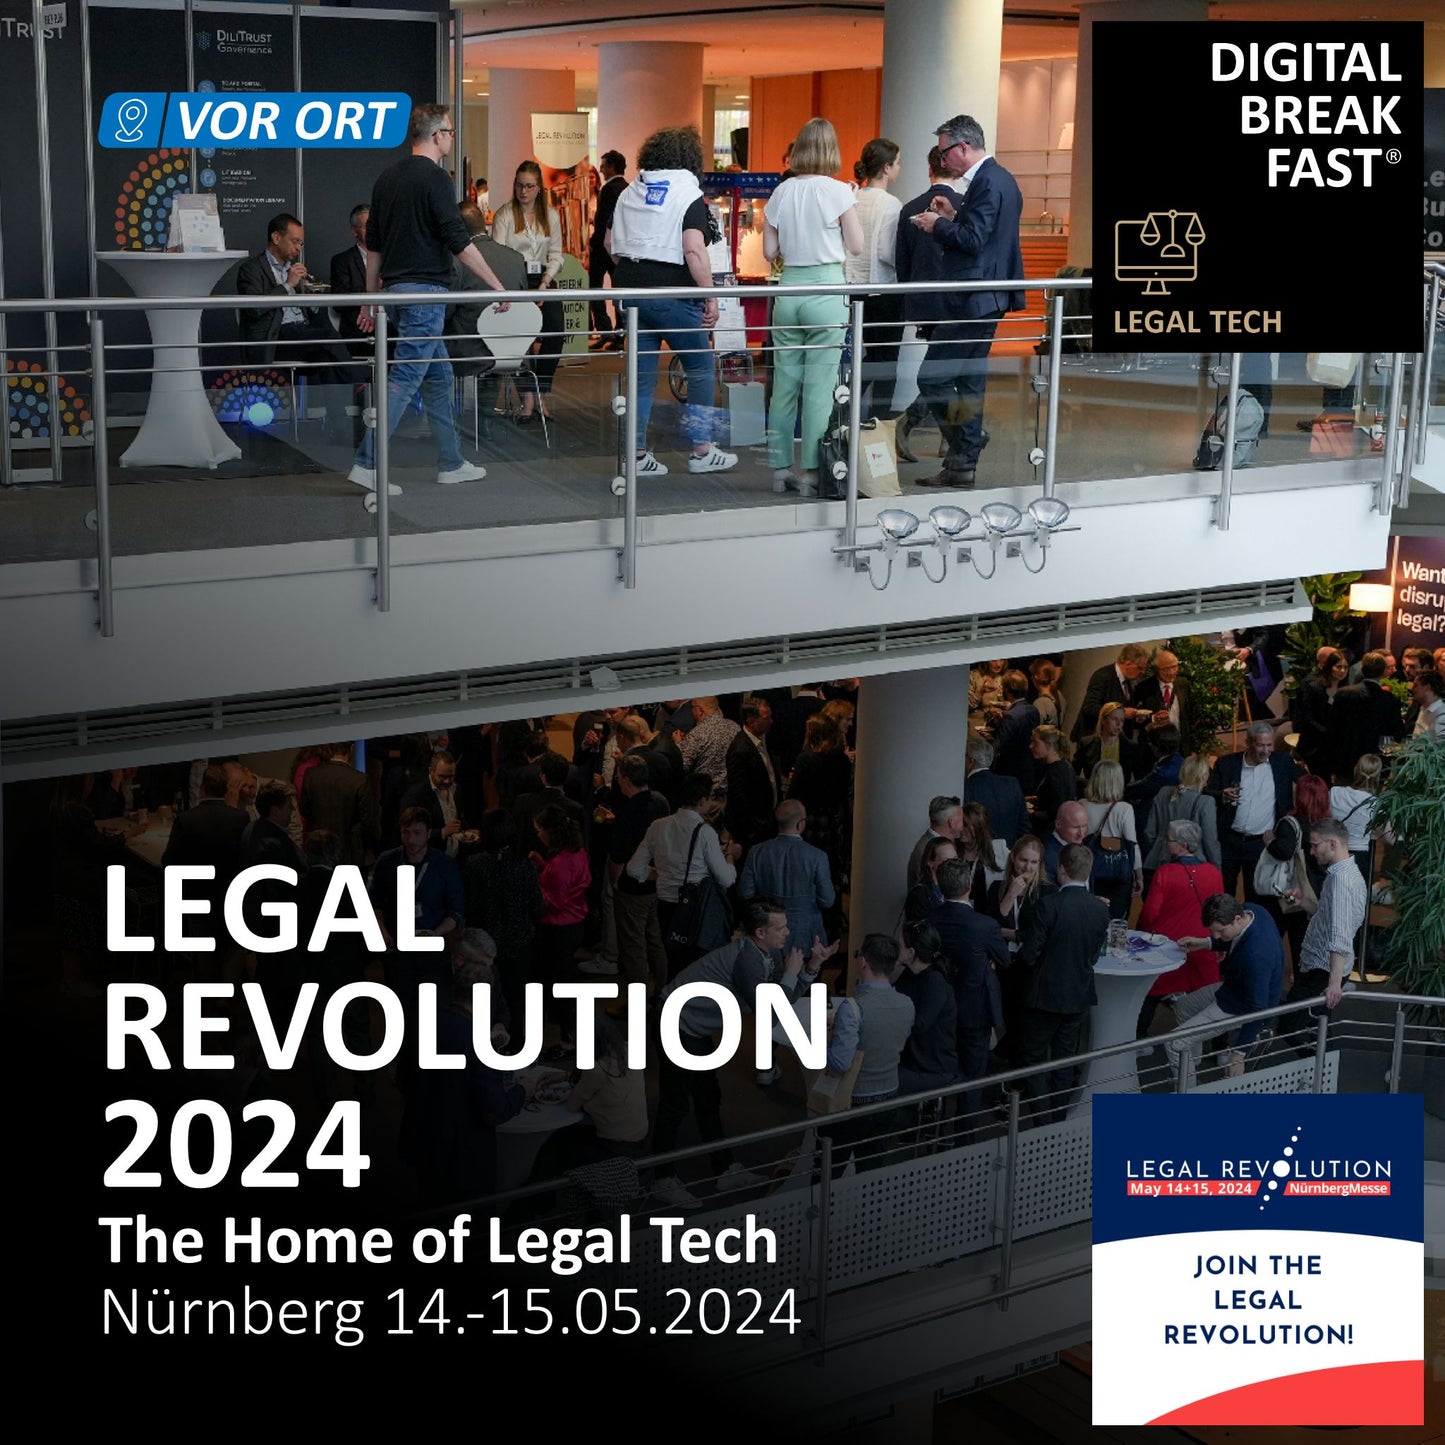 14.-15.05.2024: "LEGAL REVOLUTION 2024 -THE HOME OF LEGAL TECH" | Thomas Barsch | THOMAS BARSCH BERATUNG